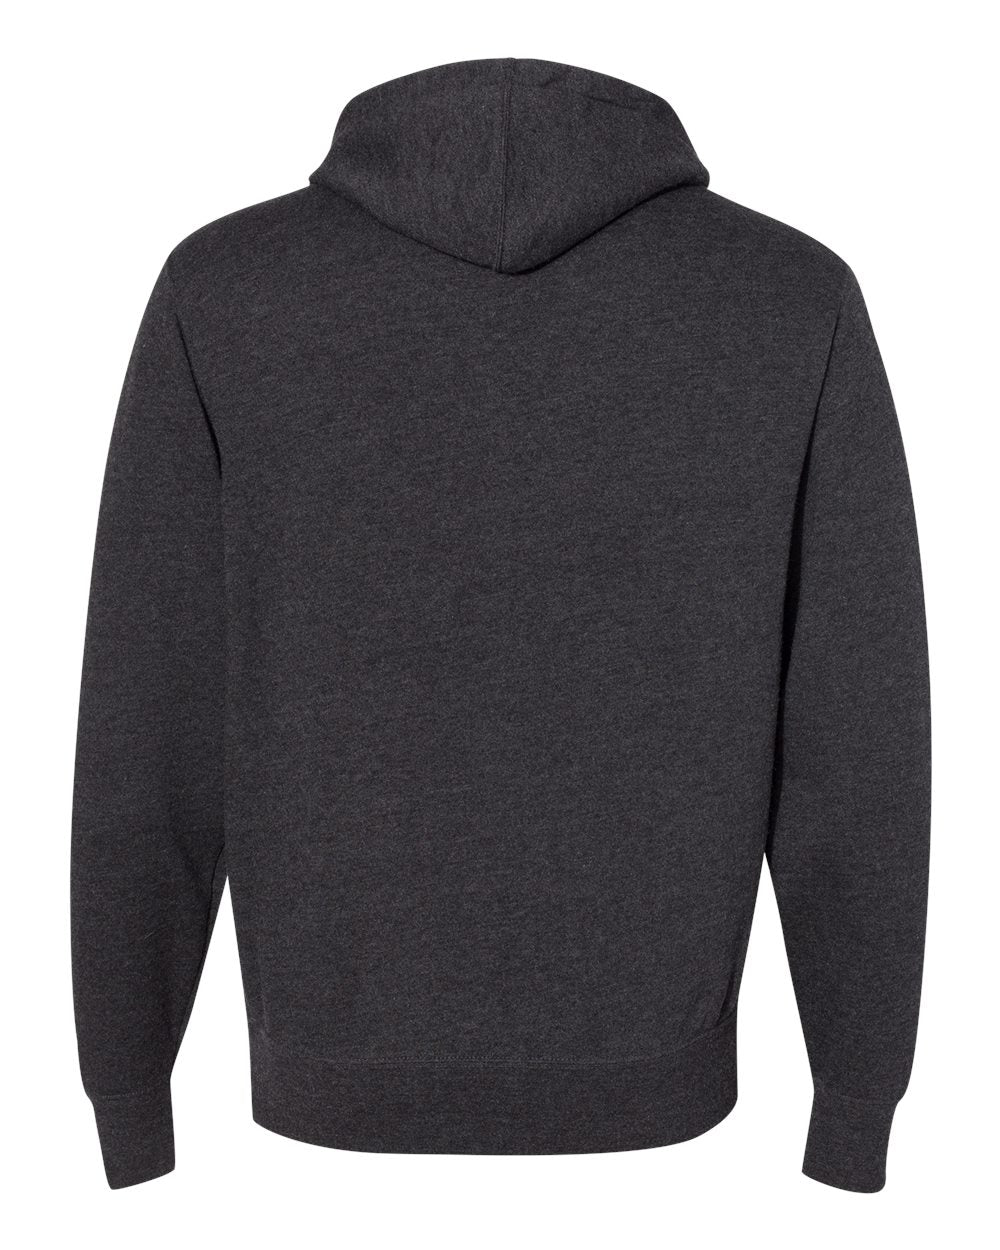 Unisex Lightweight Hooded Sweatshirt - AFX90UN - Charcoal Heather